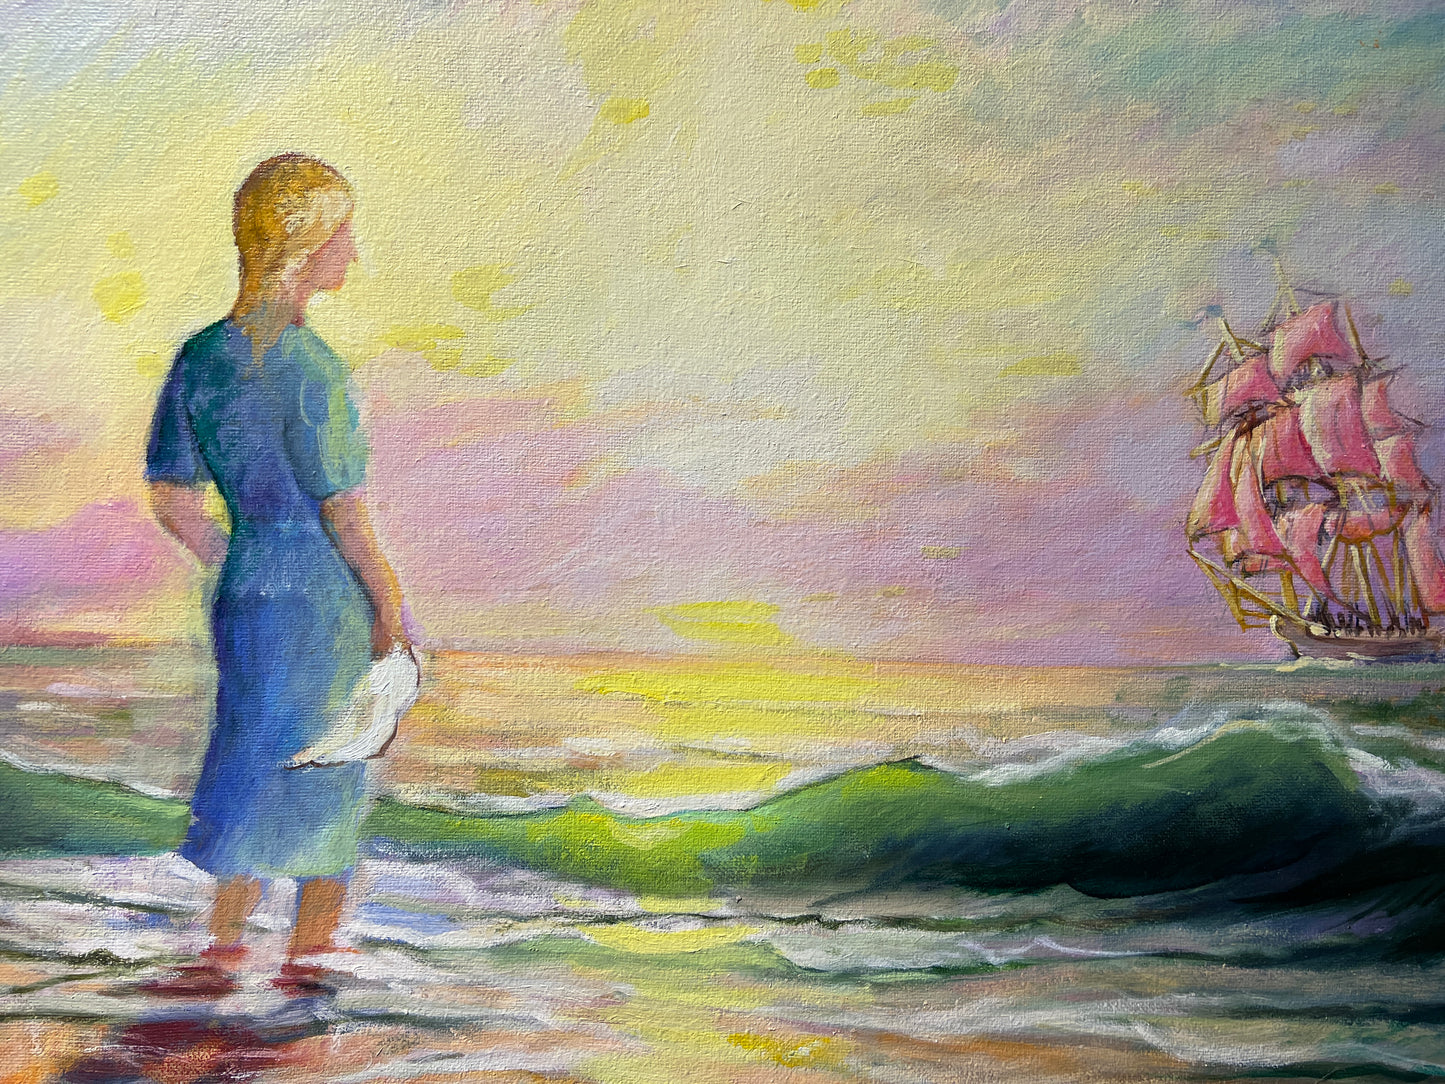 Artist Dobritsin Oil painting on canvas, seascape, "At Dawn" Gold Frame